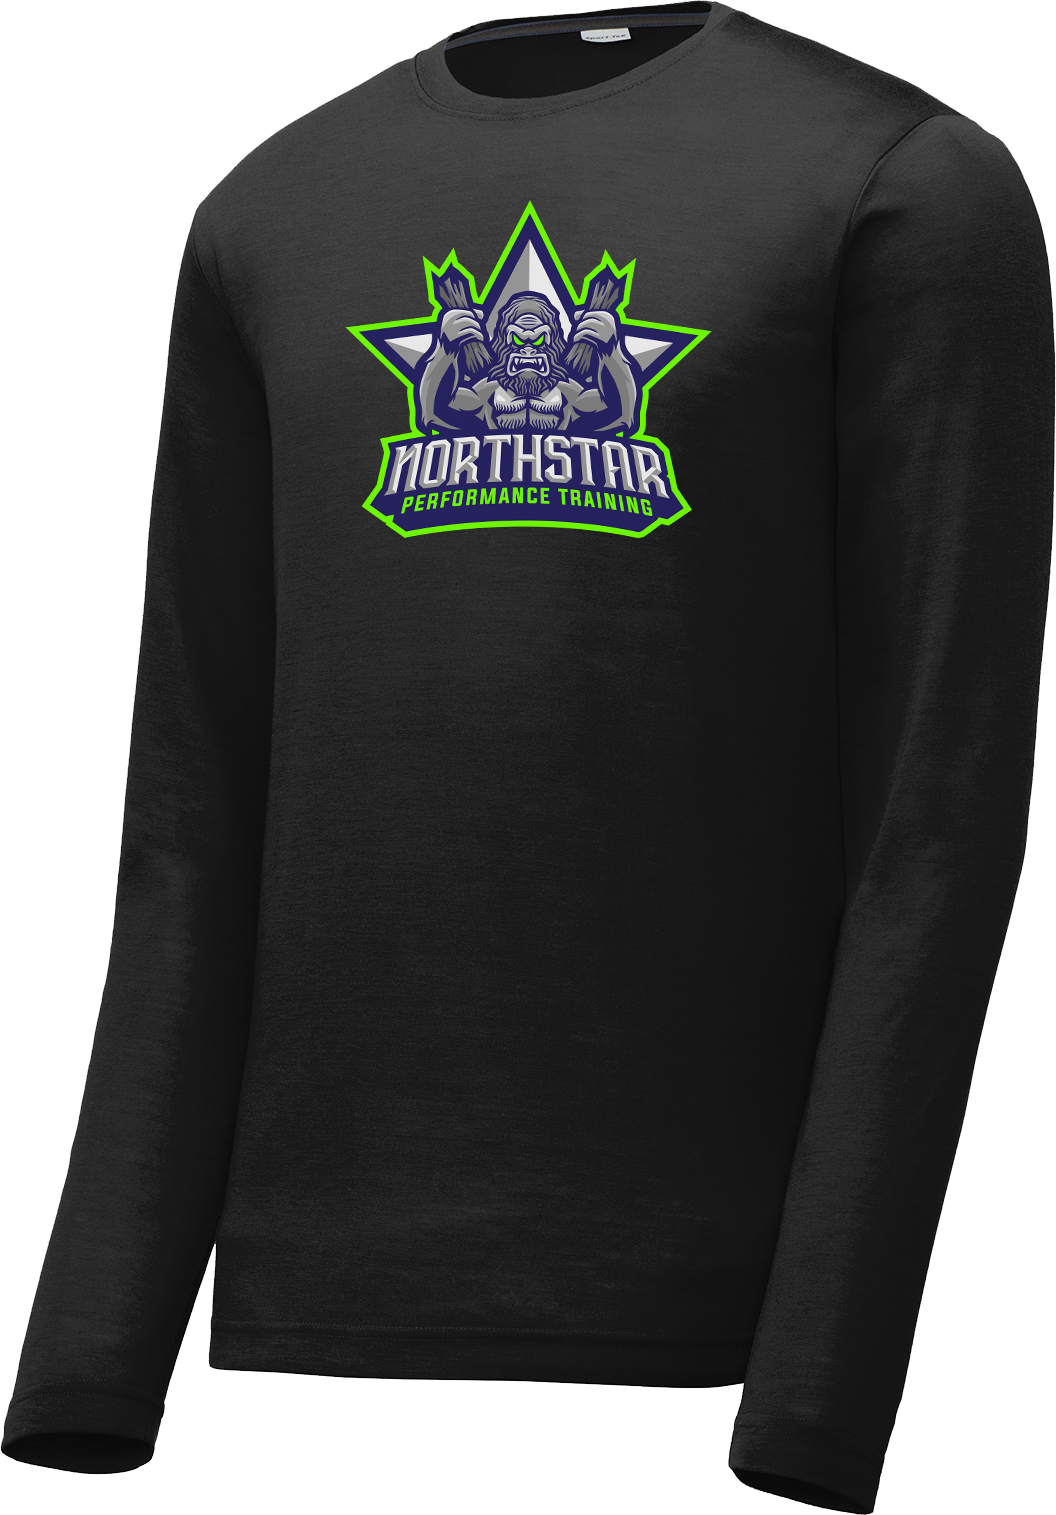 Northstar Performance Training Black Long Sleeve CottonTouch Performance Shirt